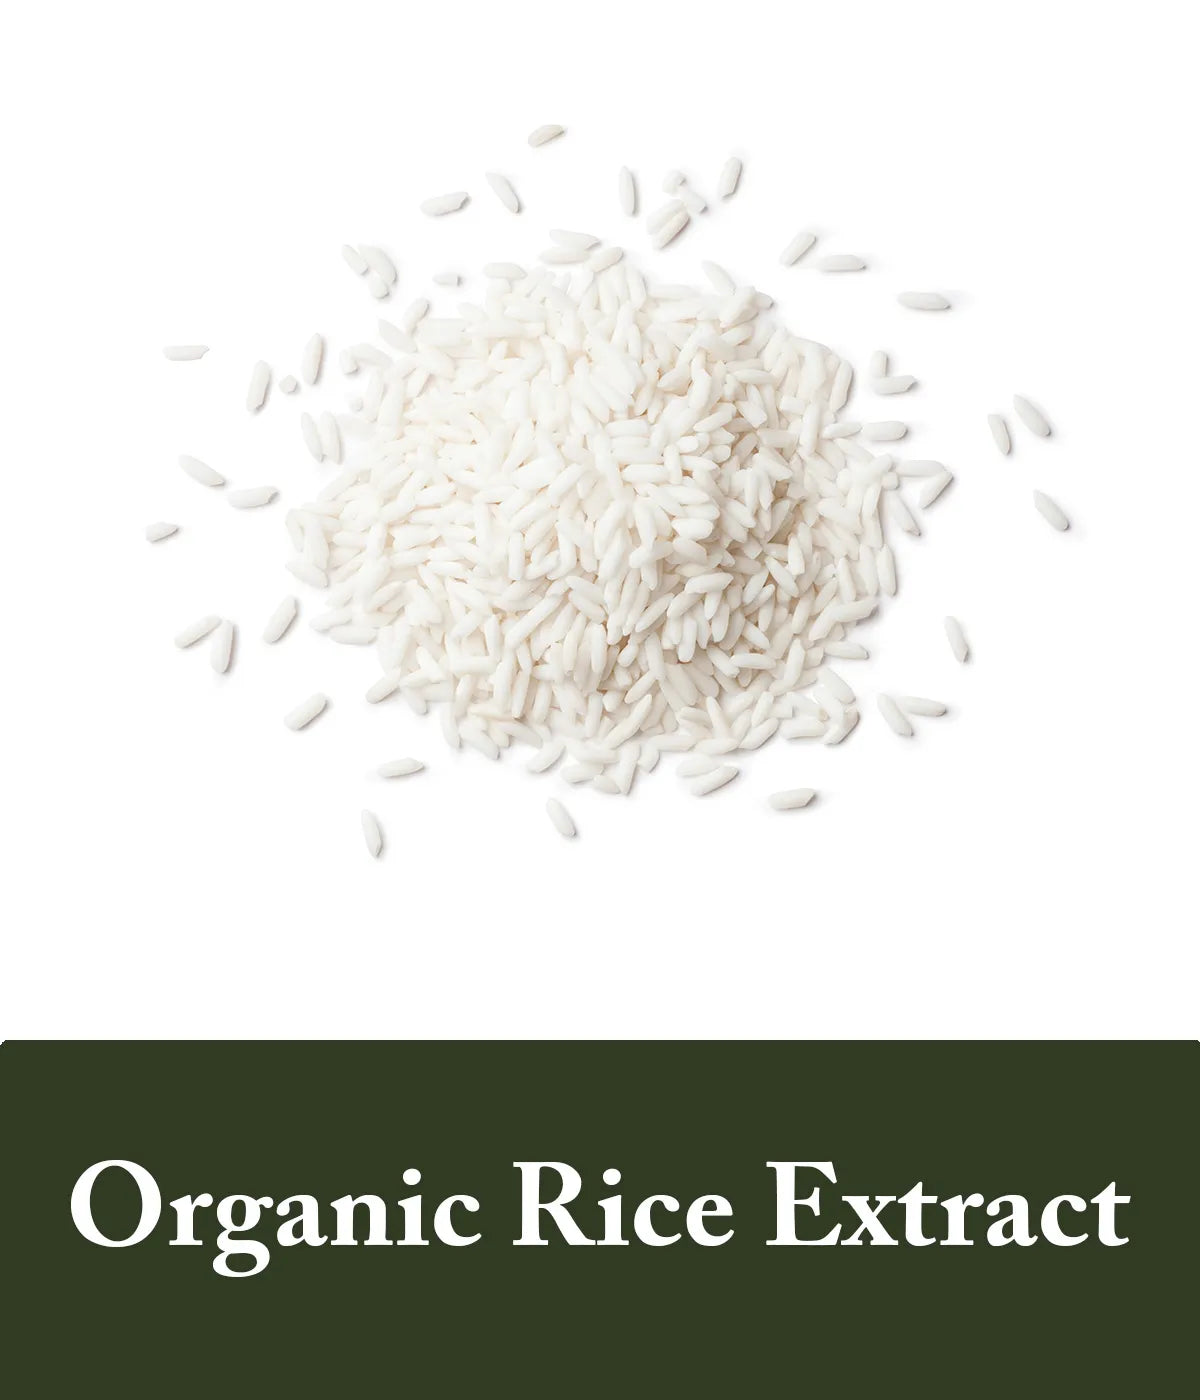 Organic Rice Extract in Rice Shampoo Bars